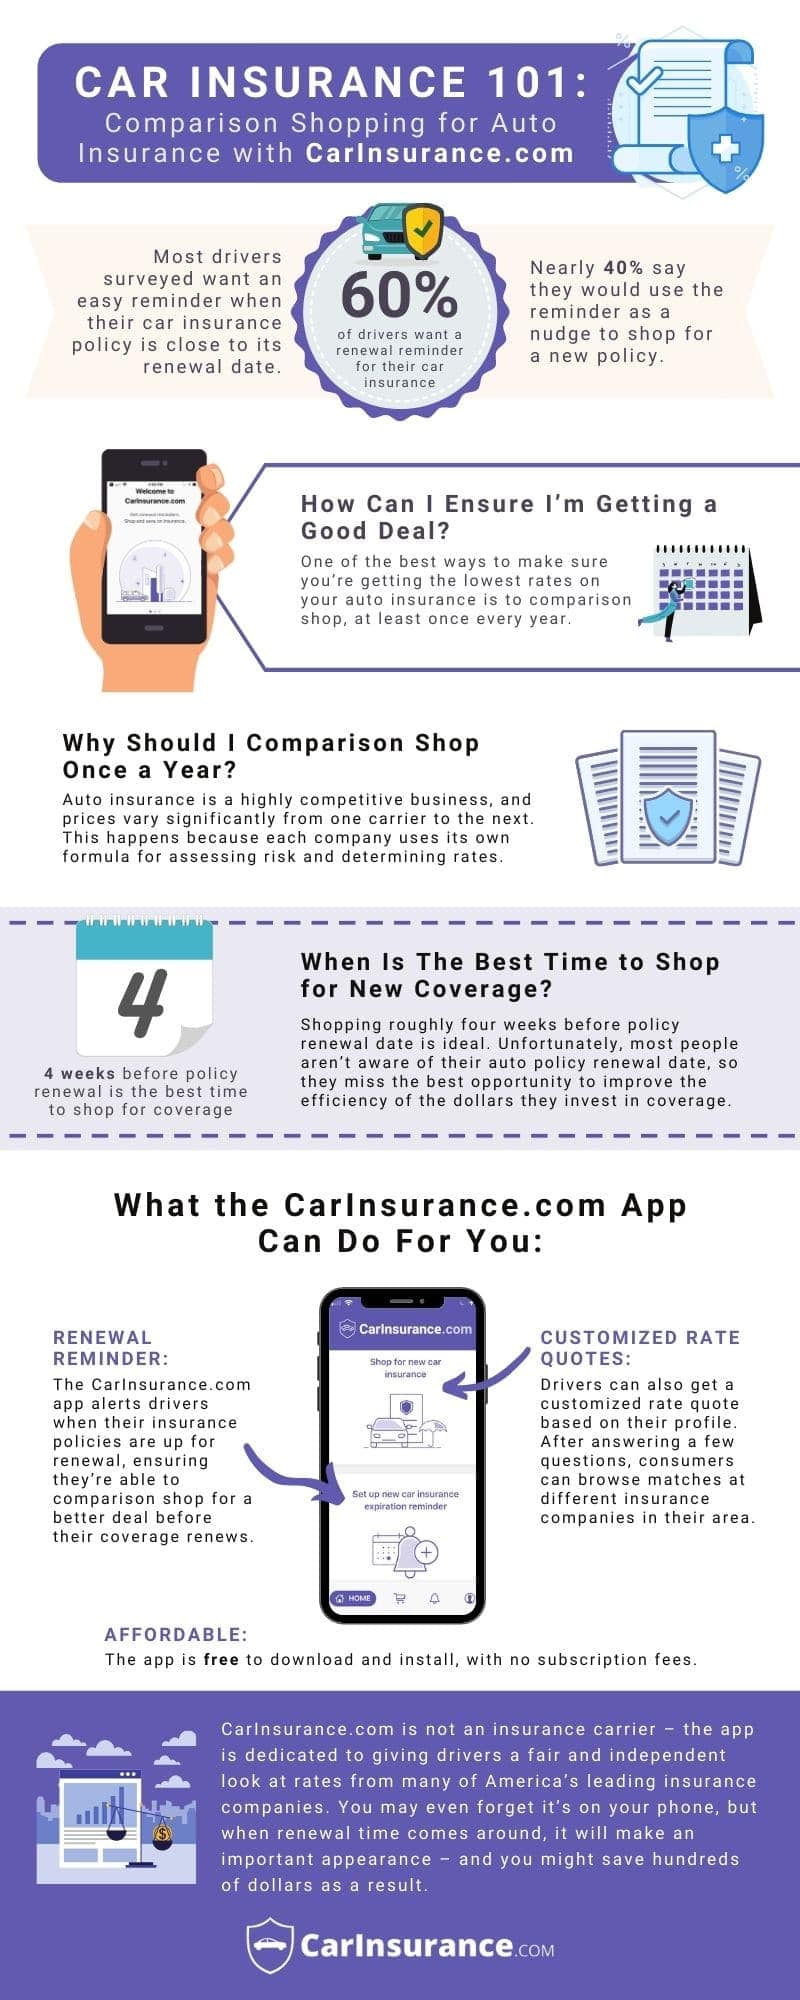 car insurance 101 comparison shopping tips